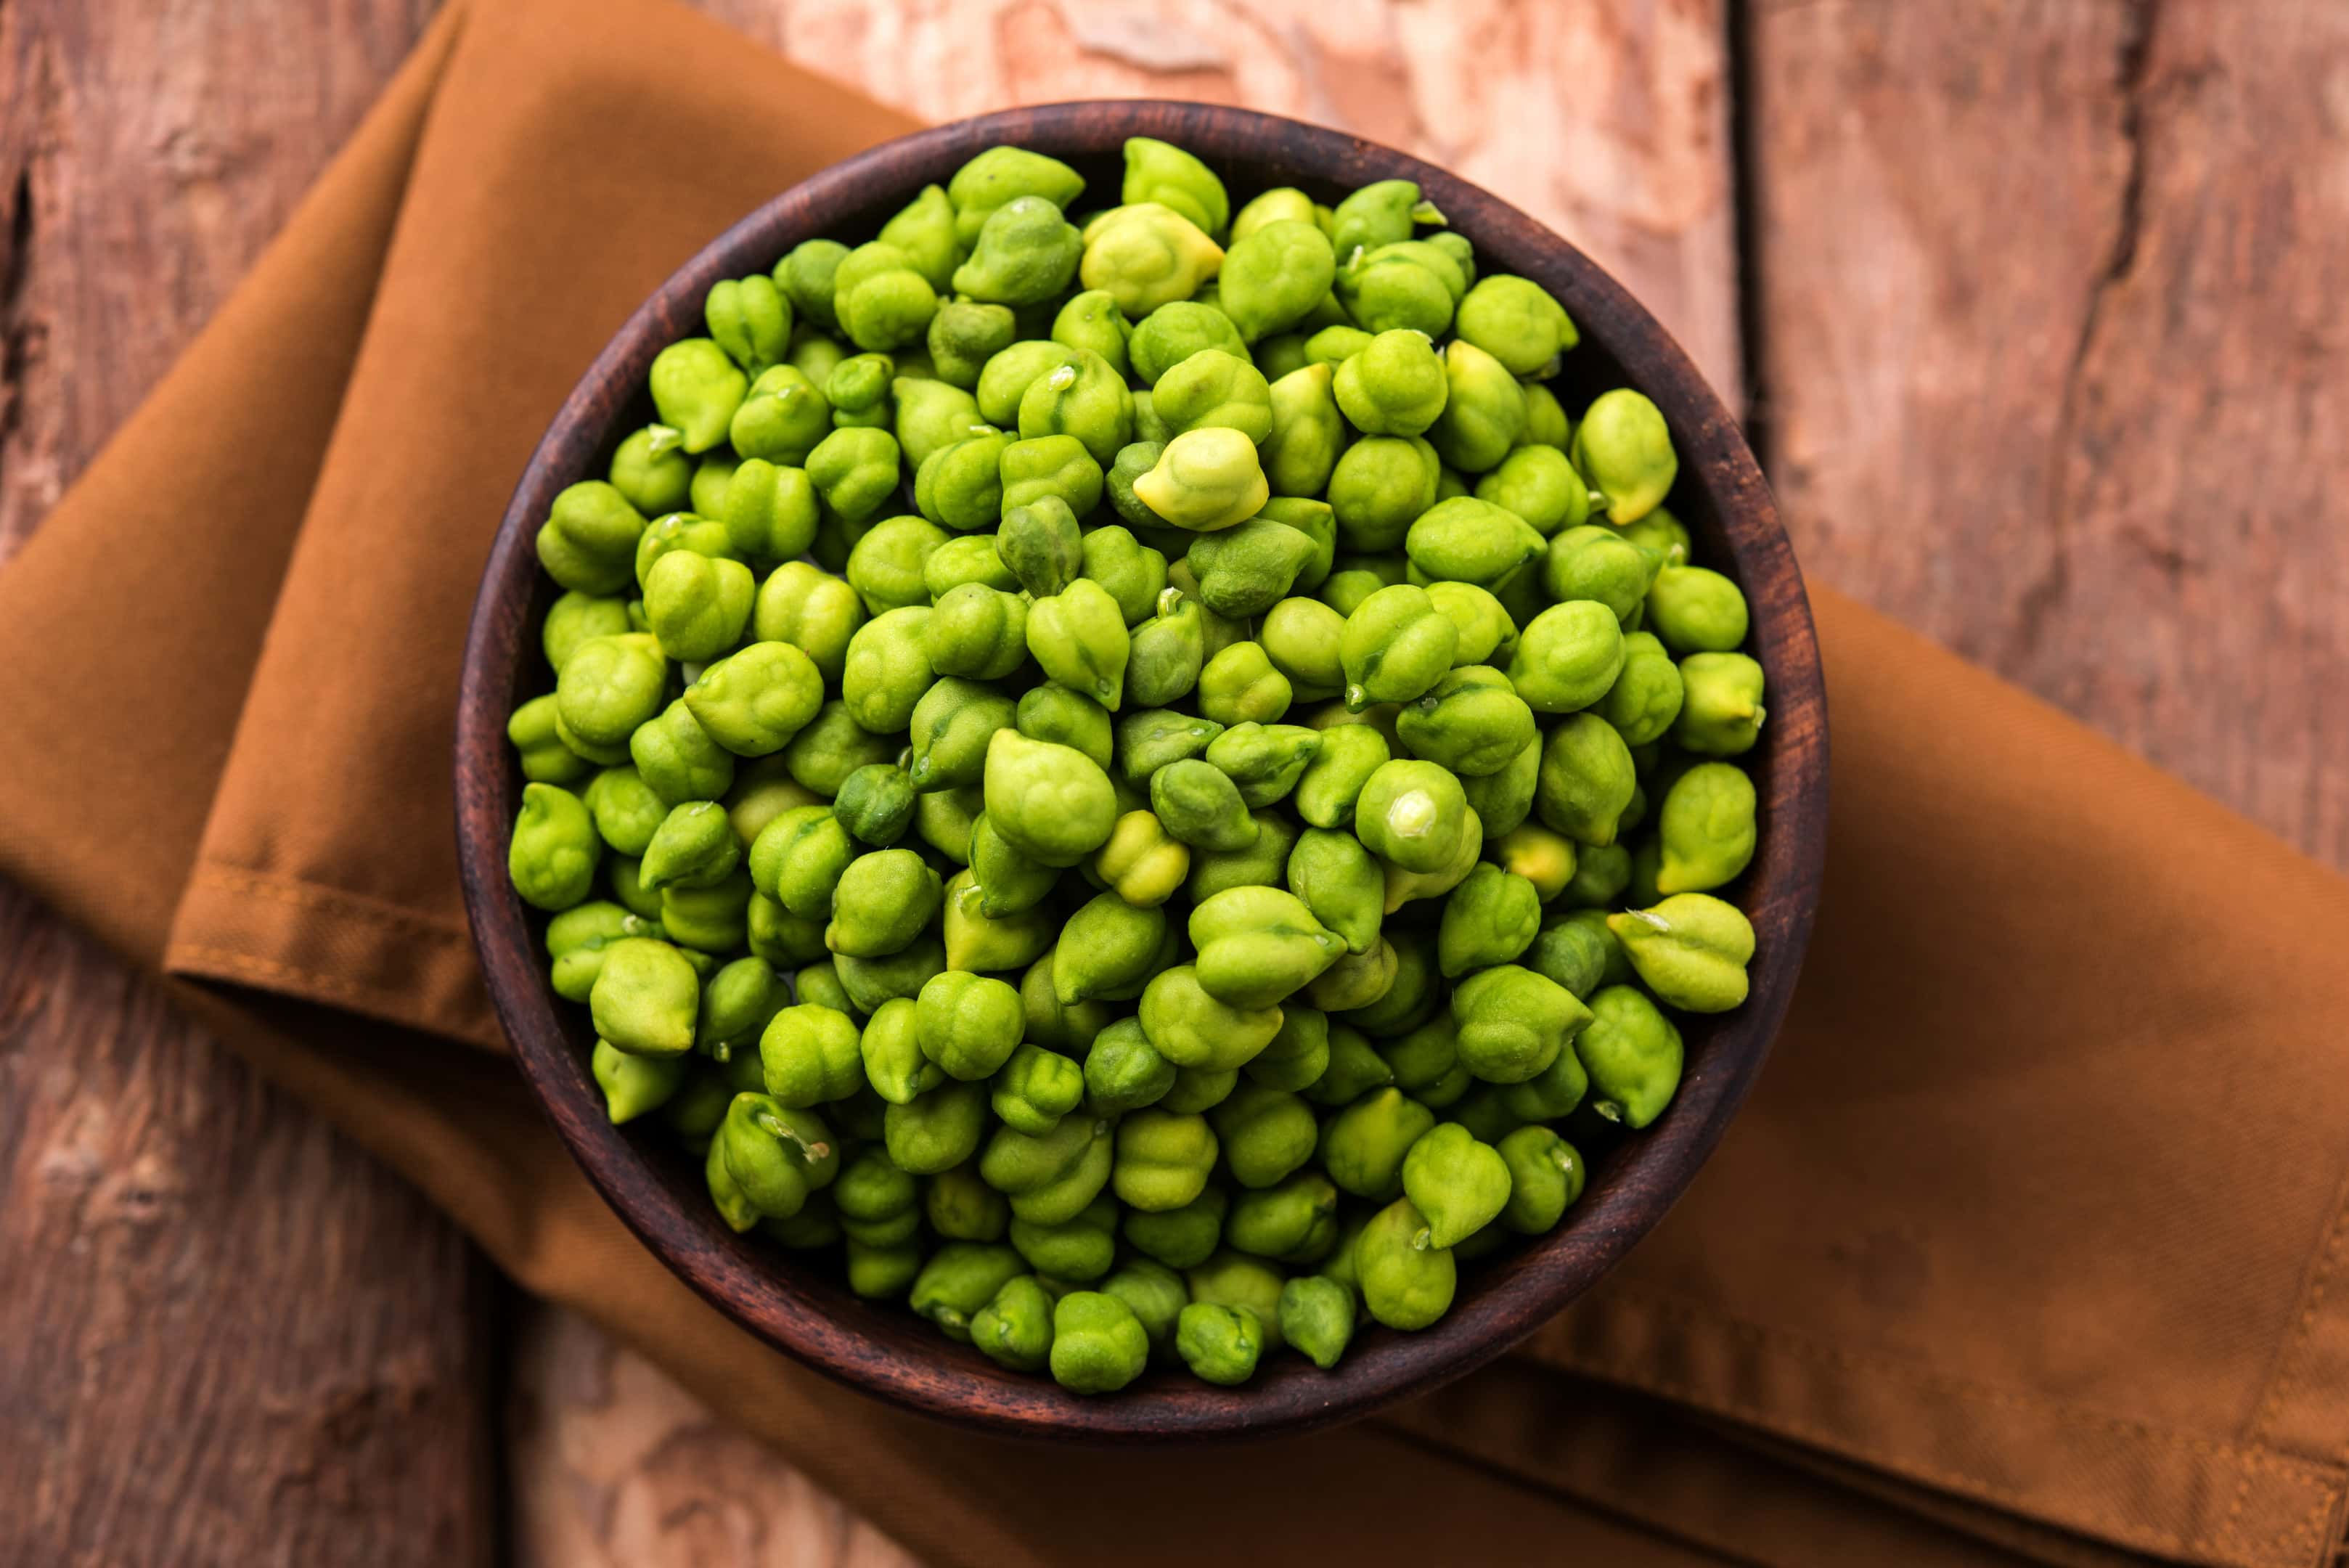 Fresh green chickpeas — Hara Harbara — in a bowl